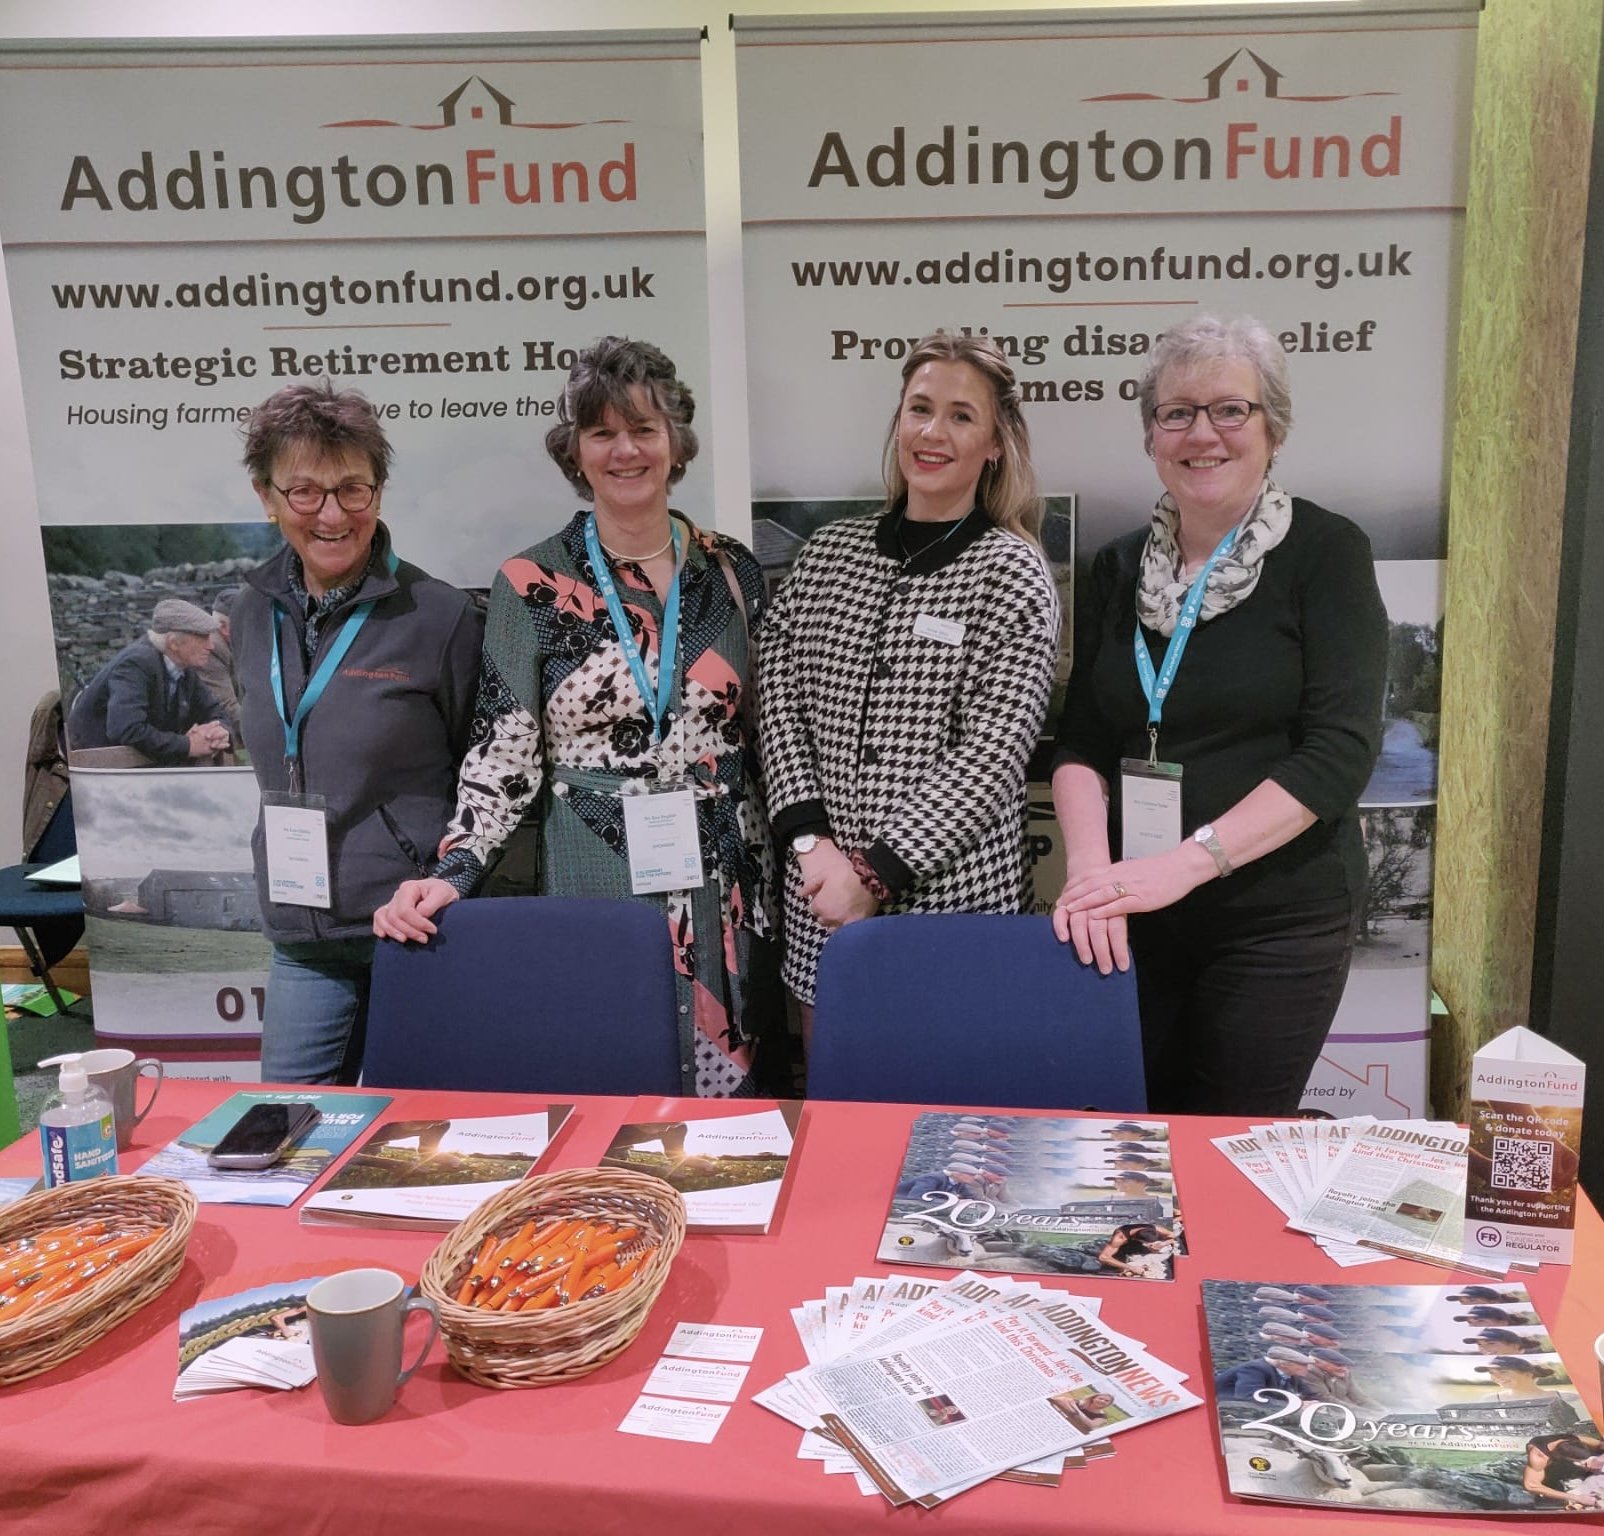 Addington Fund Staff and Trustees